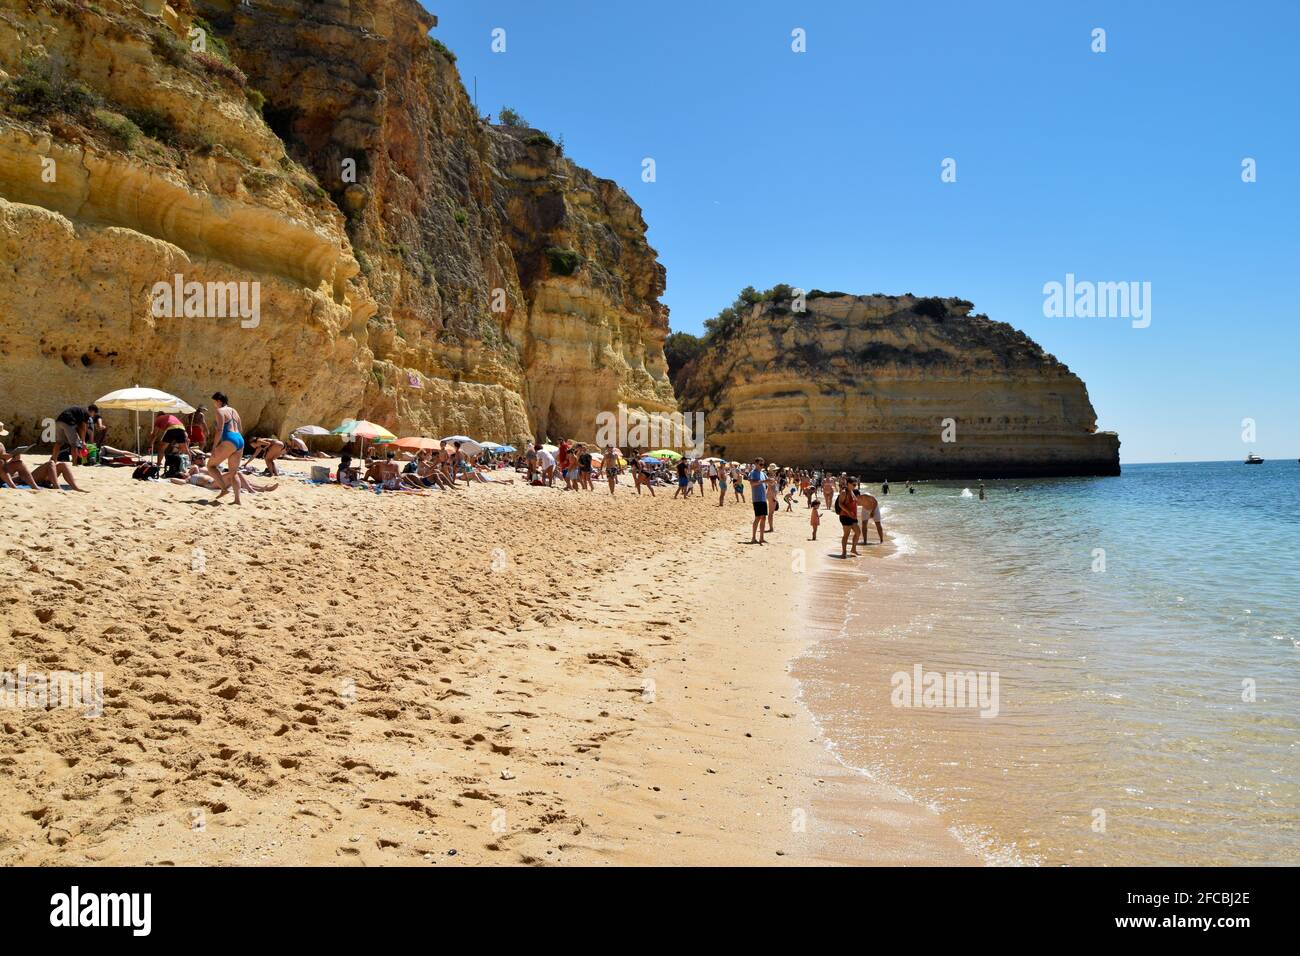 People enjoying the beach at Praia da Marinha, Marinha beach in Algarve Portugal on summer time with beautiful sea and mountains views Stock Photo